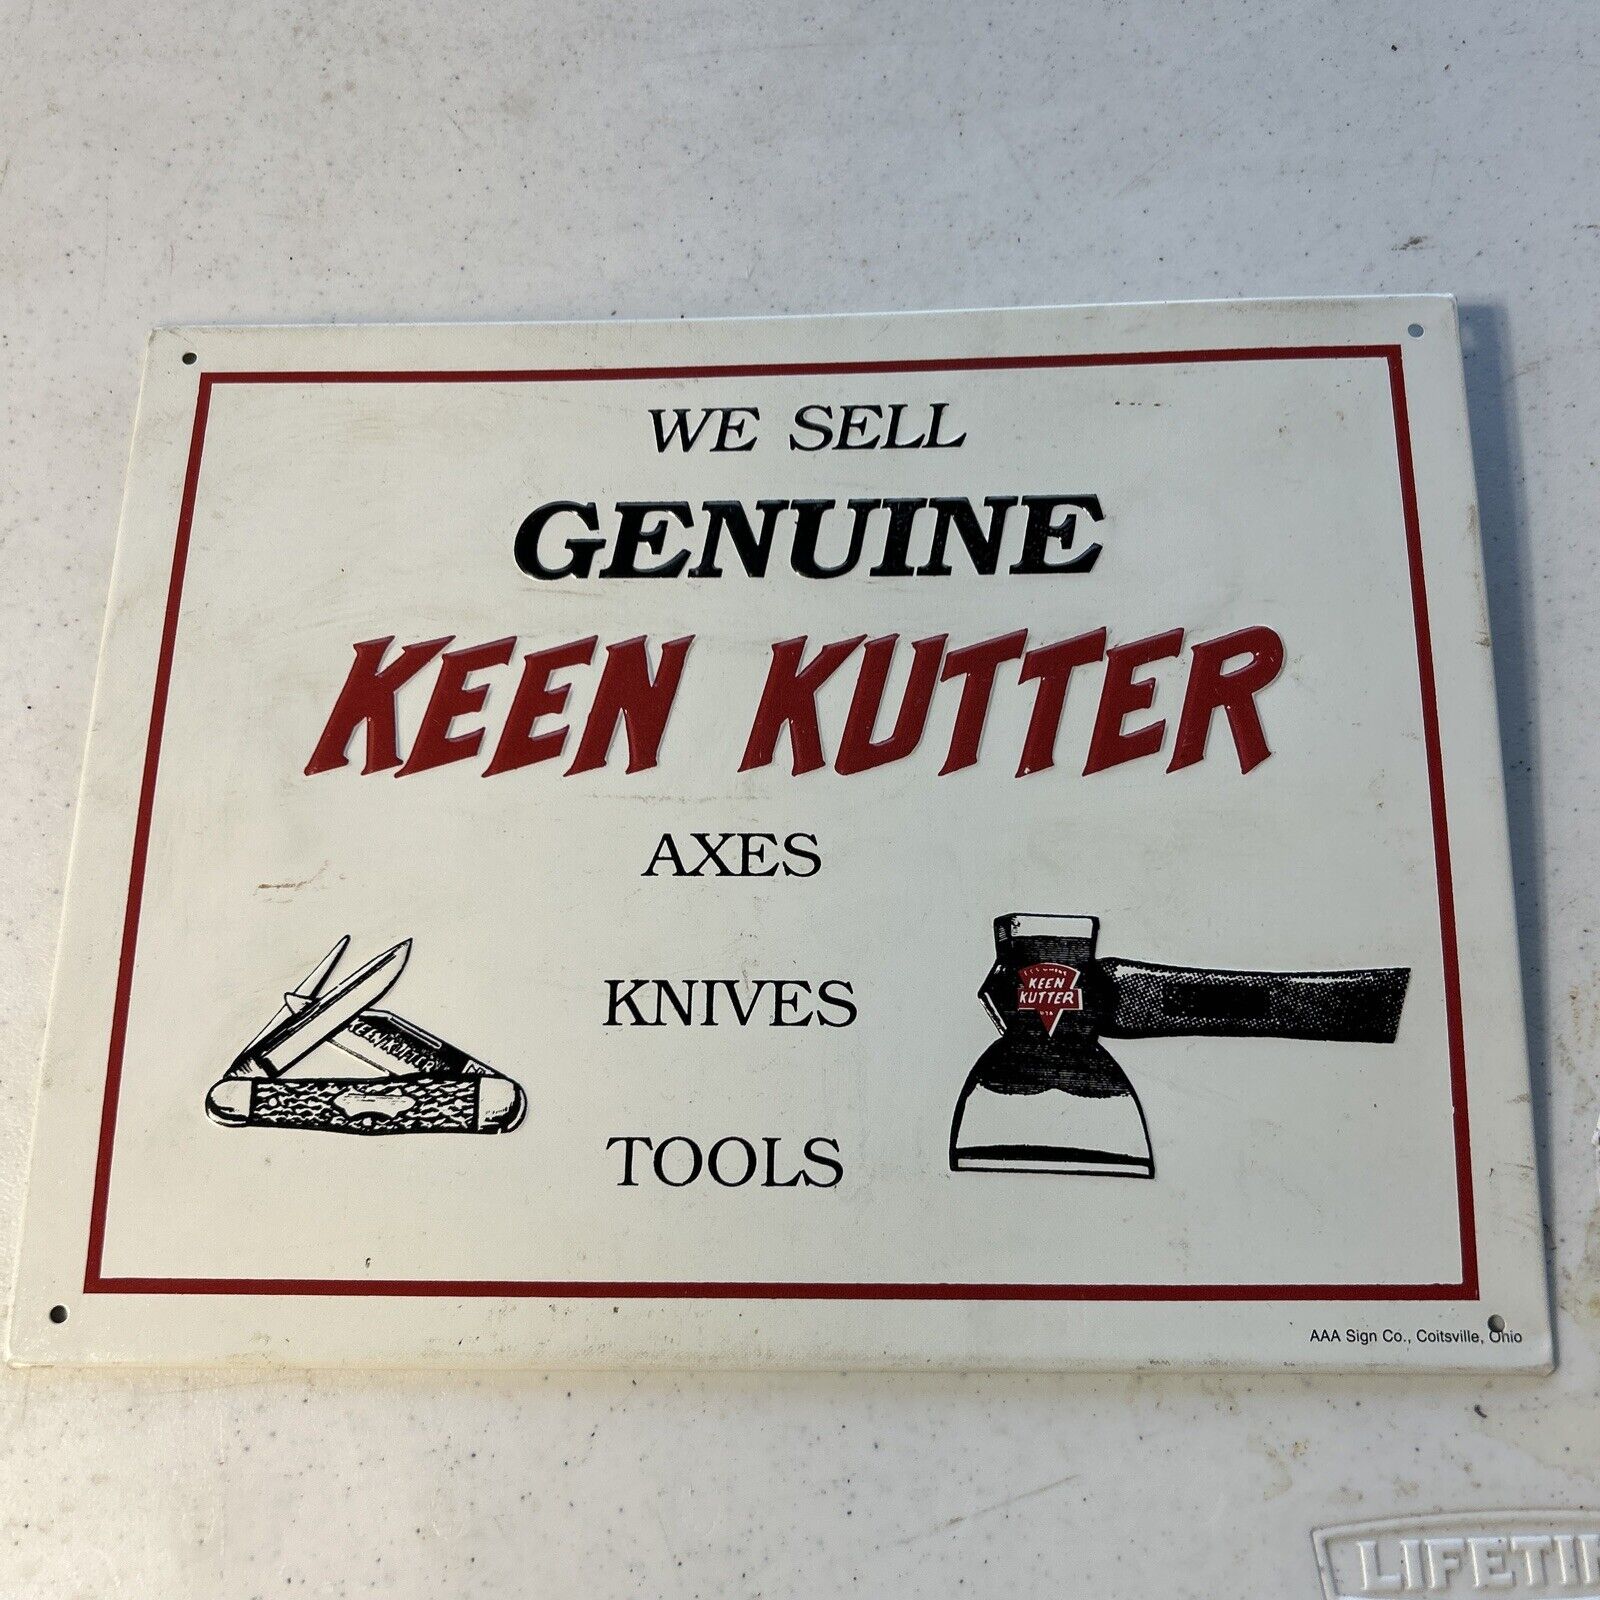 Keen Kutter Sign Axes Knives Tools AAA Sign Co. Coitsville Ohio